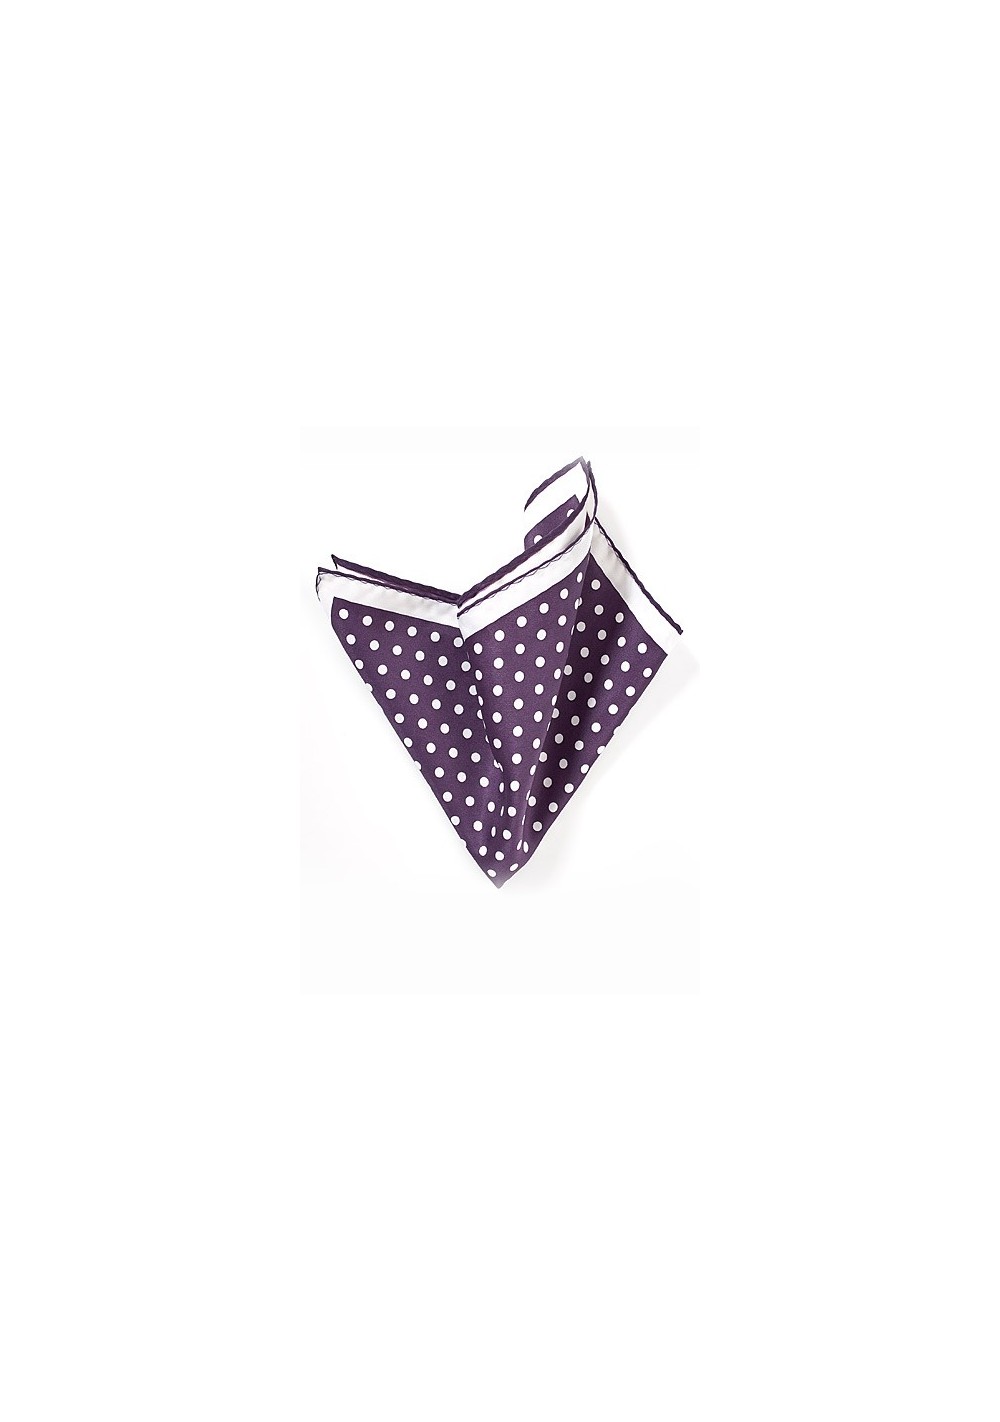 Purple and White Dot Print Pocket Square